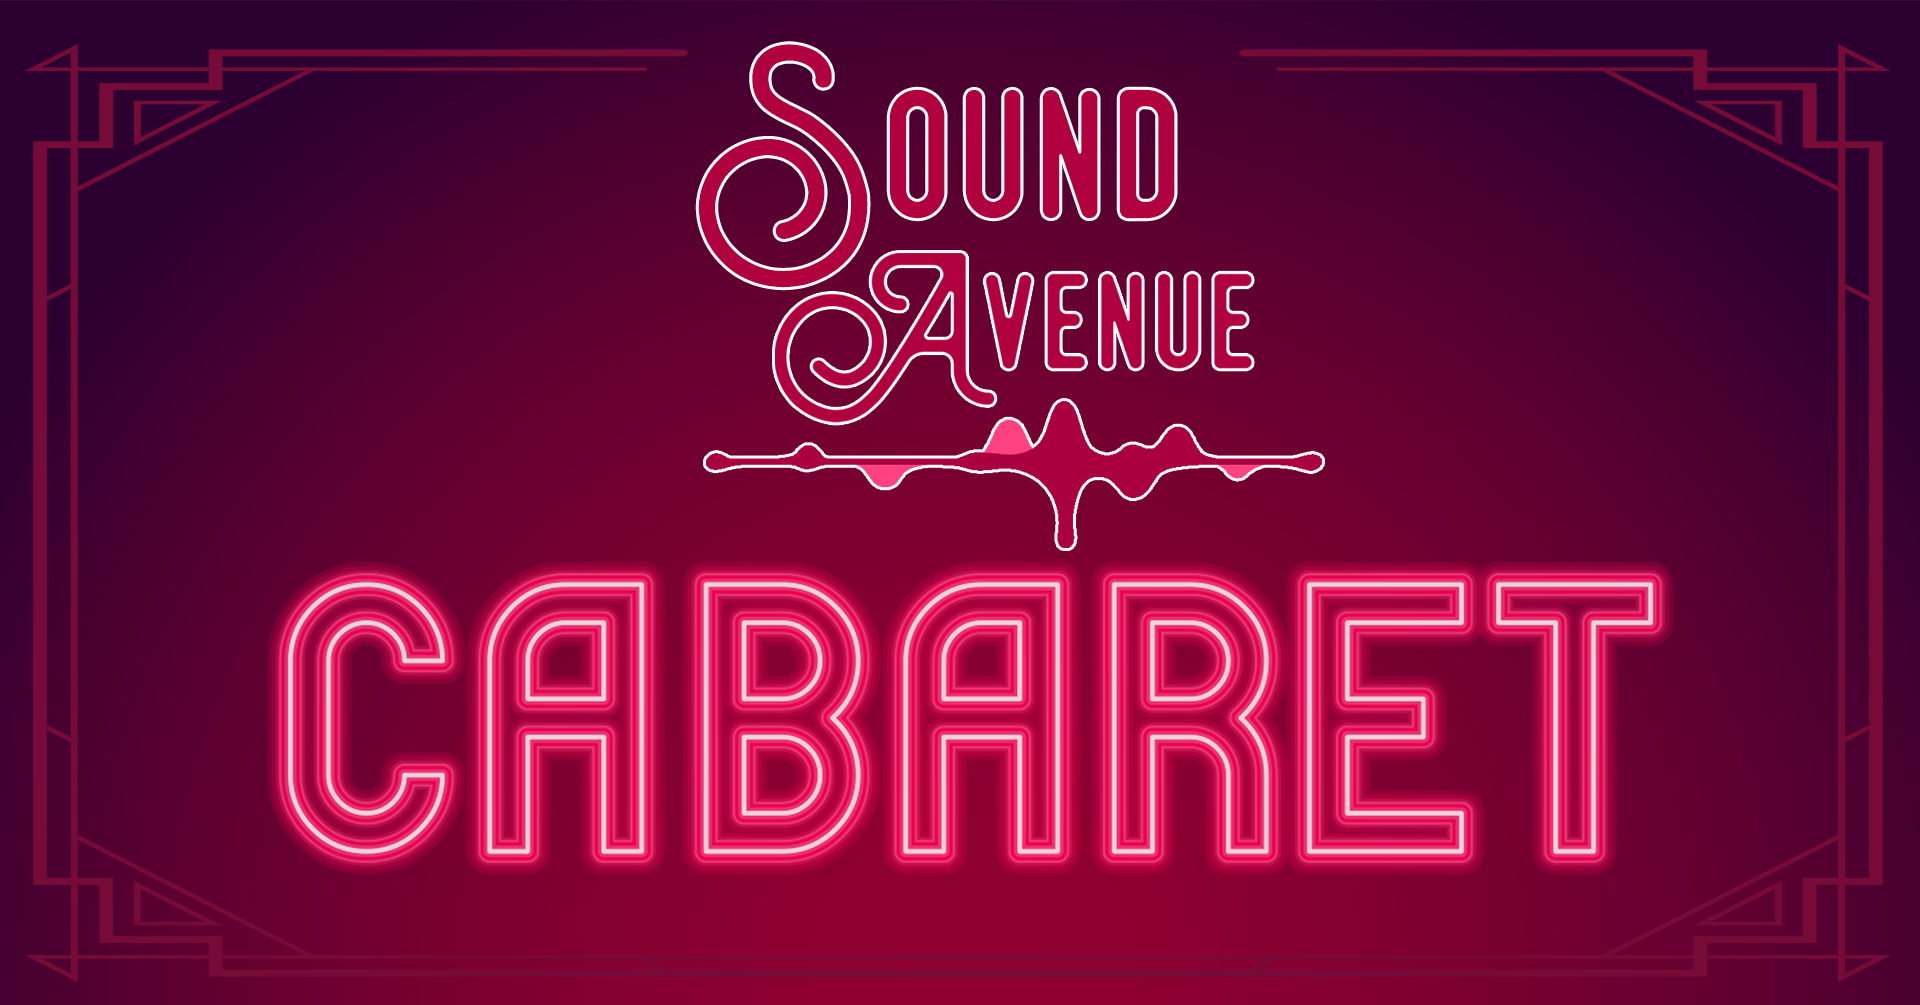 Sound Avenue Cabaret